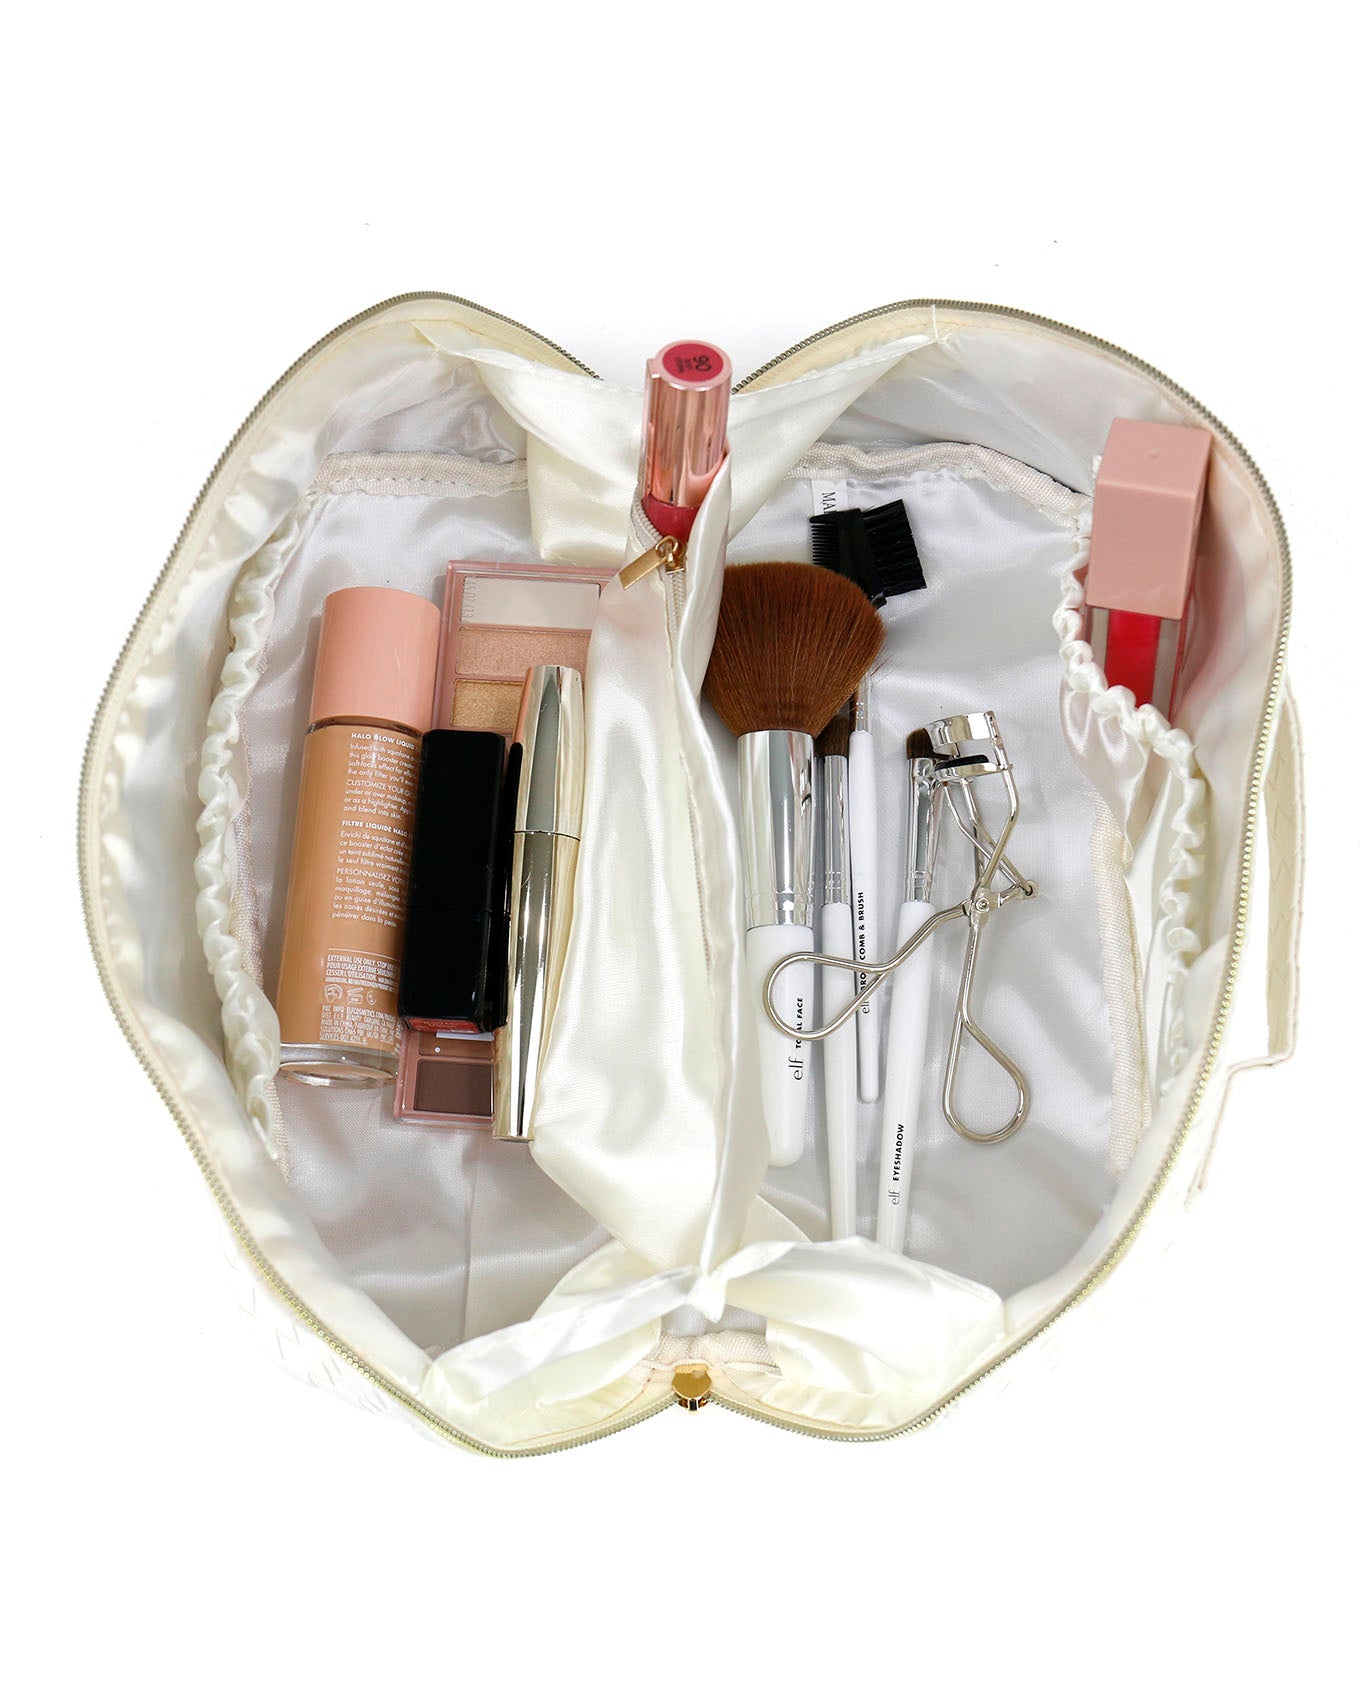 Interior view of Ivory Makeup Bag